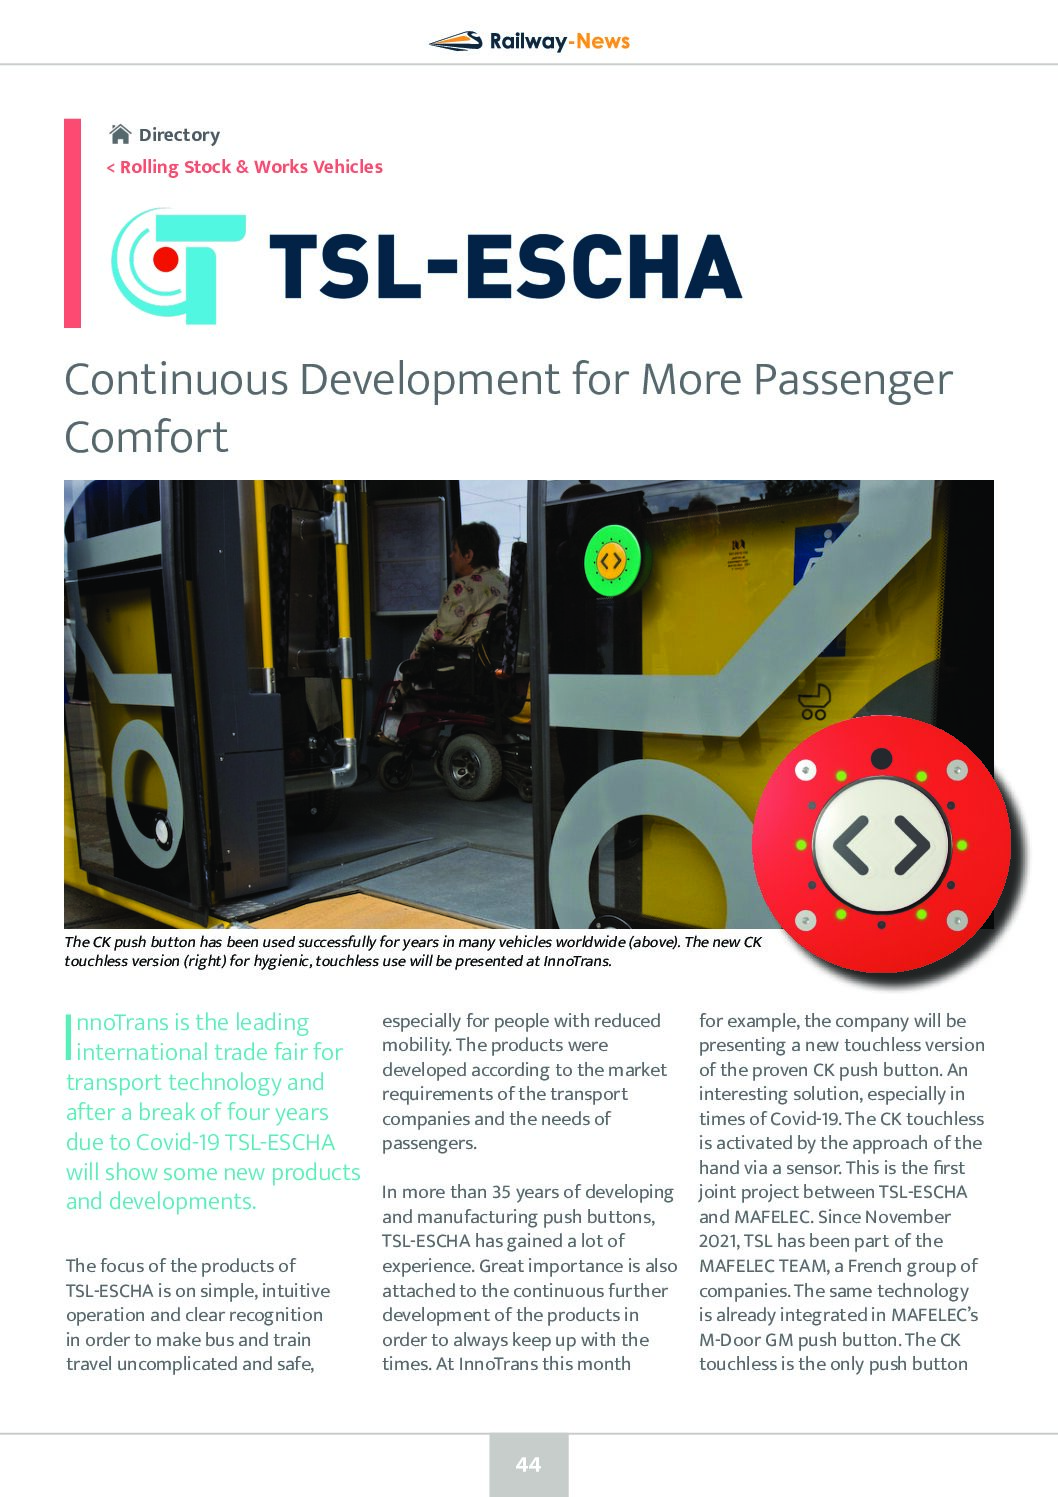 Continuous Development for More Passenger Comfort